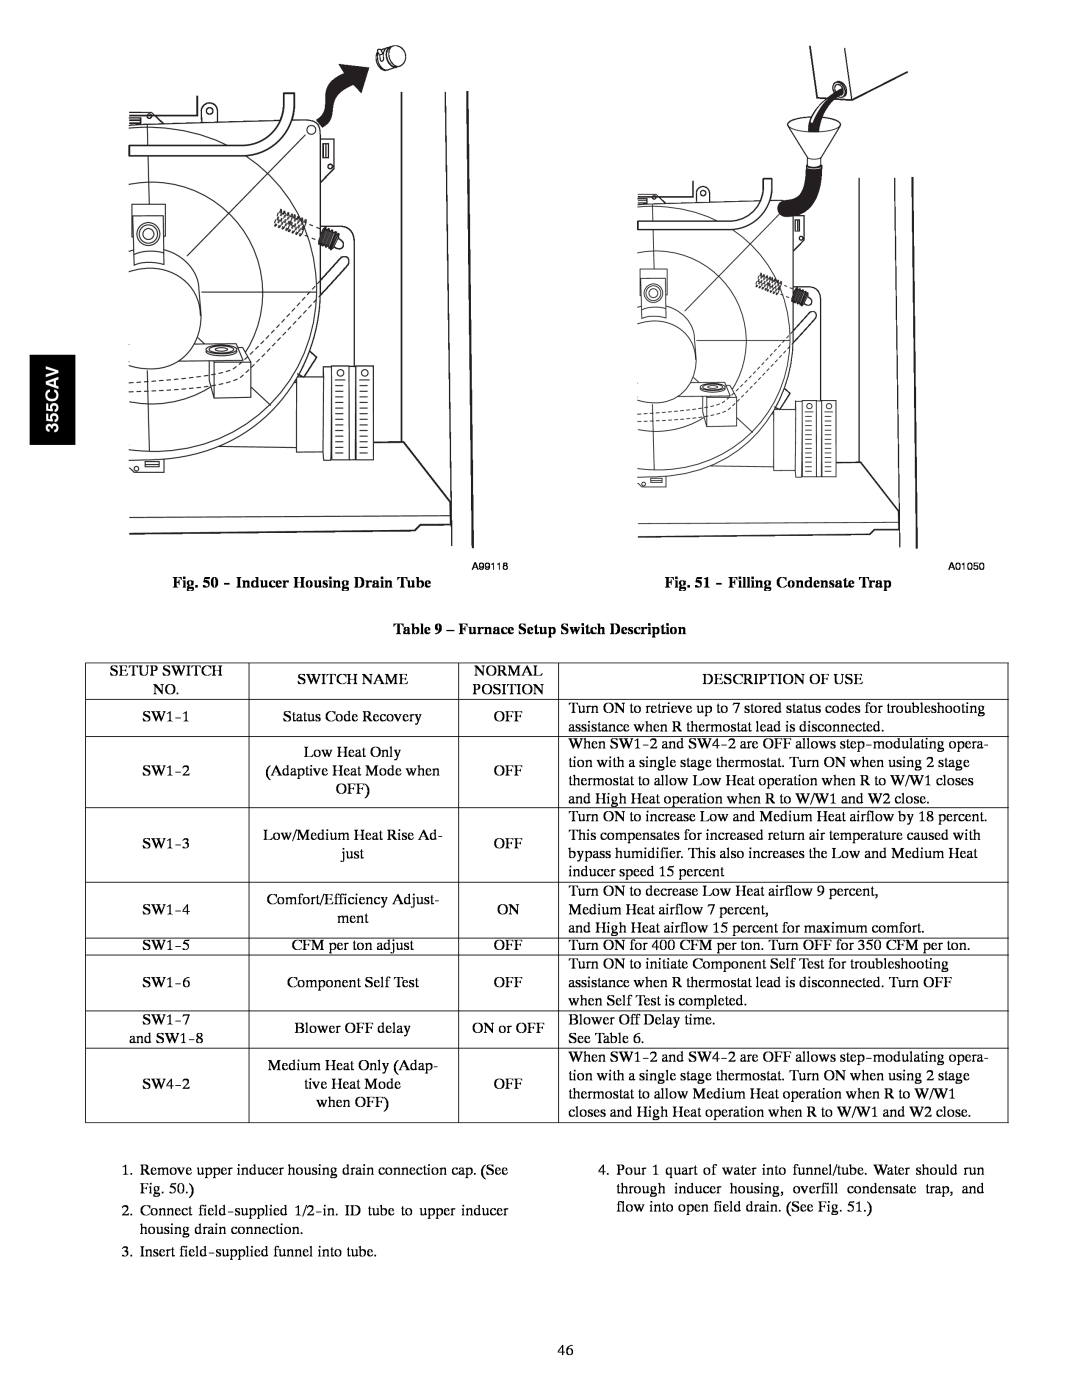 Bryant 355CAV Inducer Housing Drain Tube, Filling Condensate Trap, Furnace Setup Switch Description 